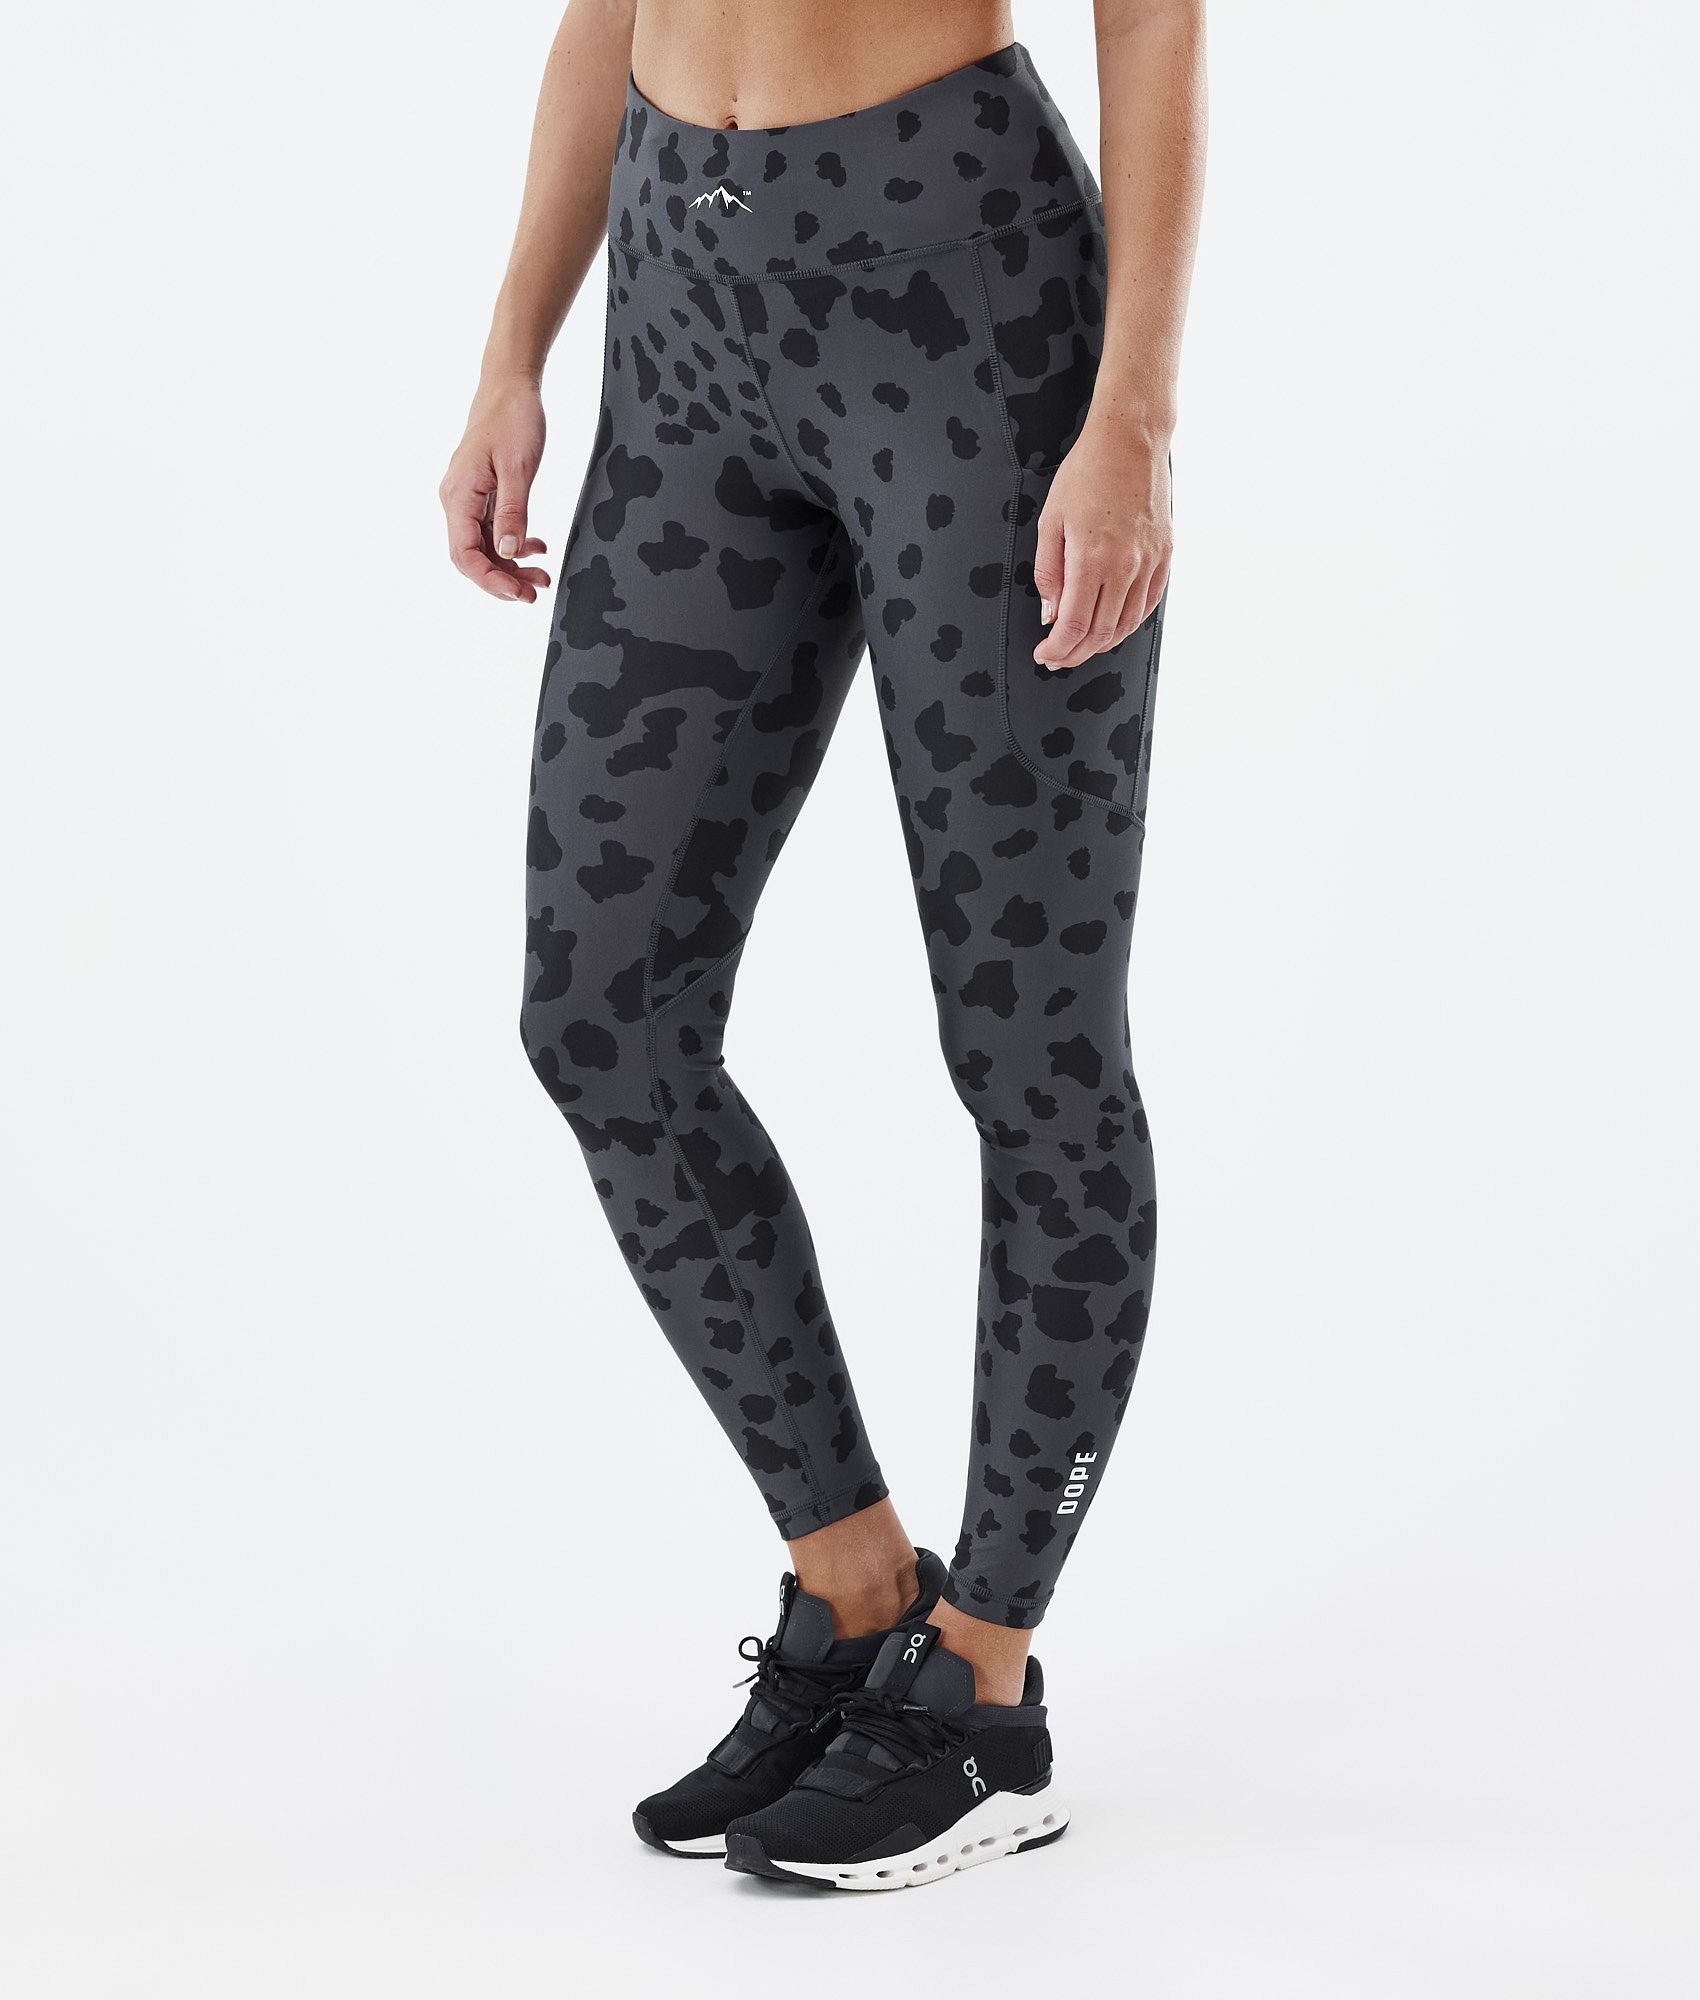 Women's Grey Polyester Activewear Legging